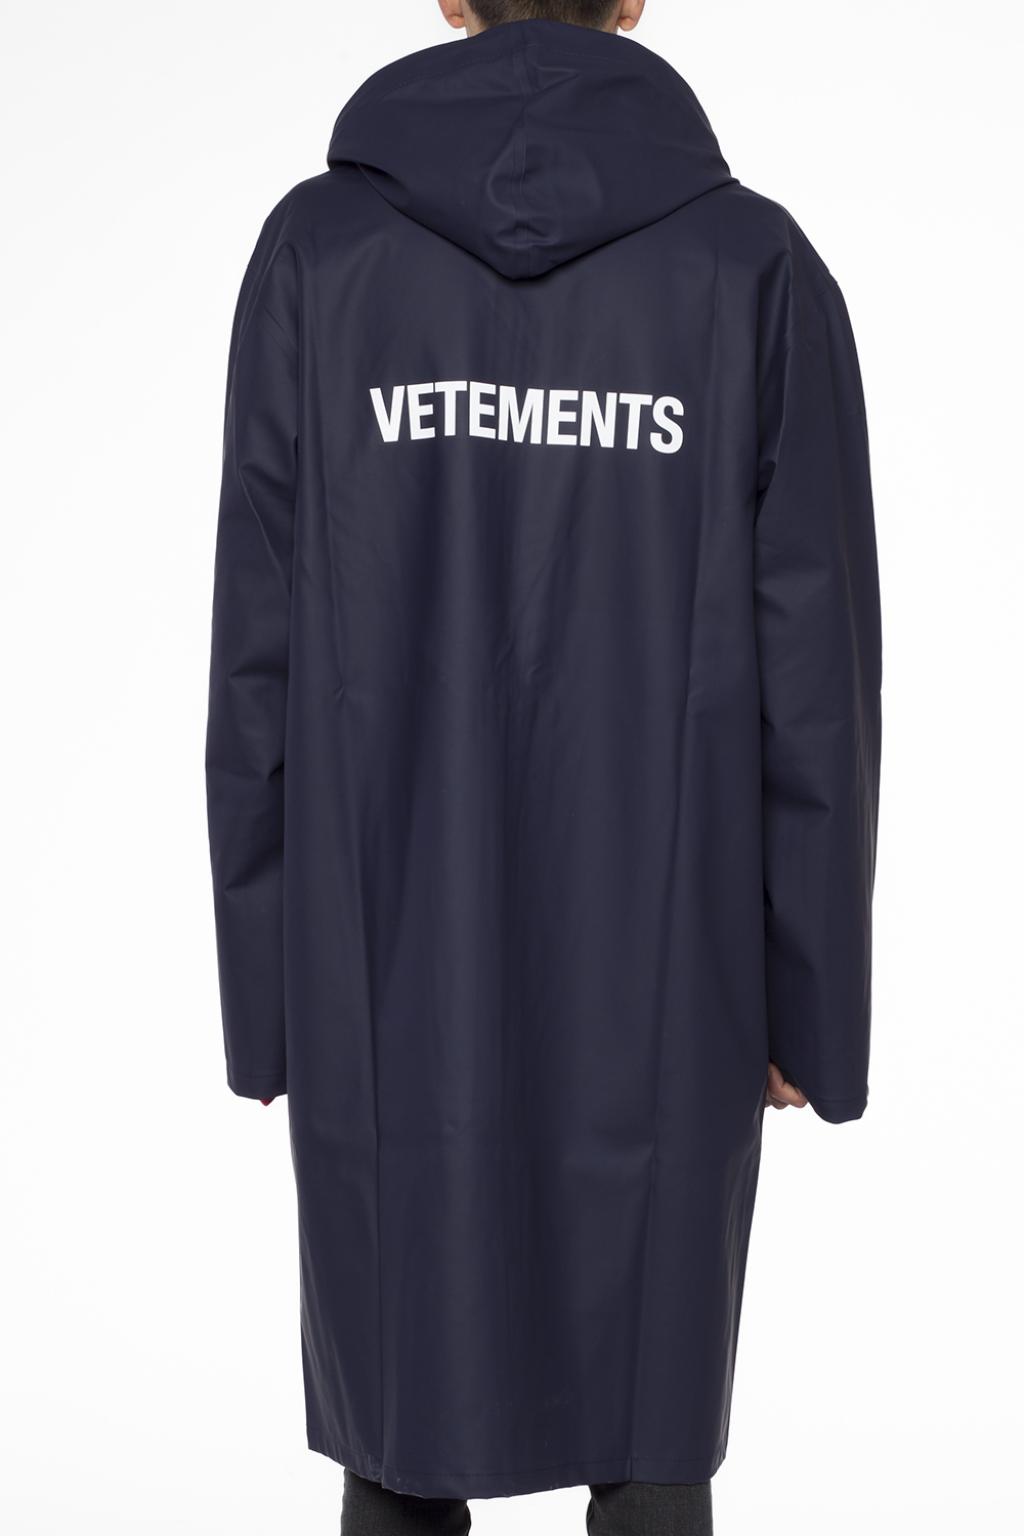 Navy blue Raincoat with logo VETEMENTS - Vitkac Italy